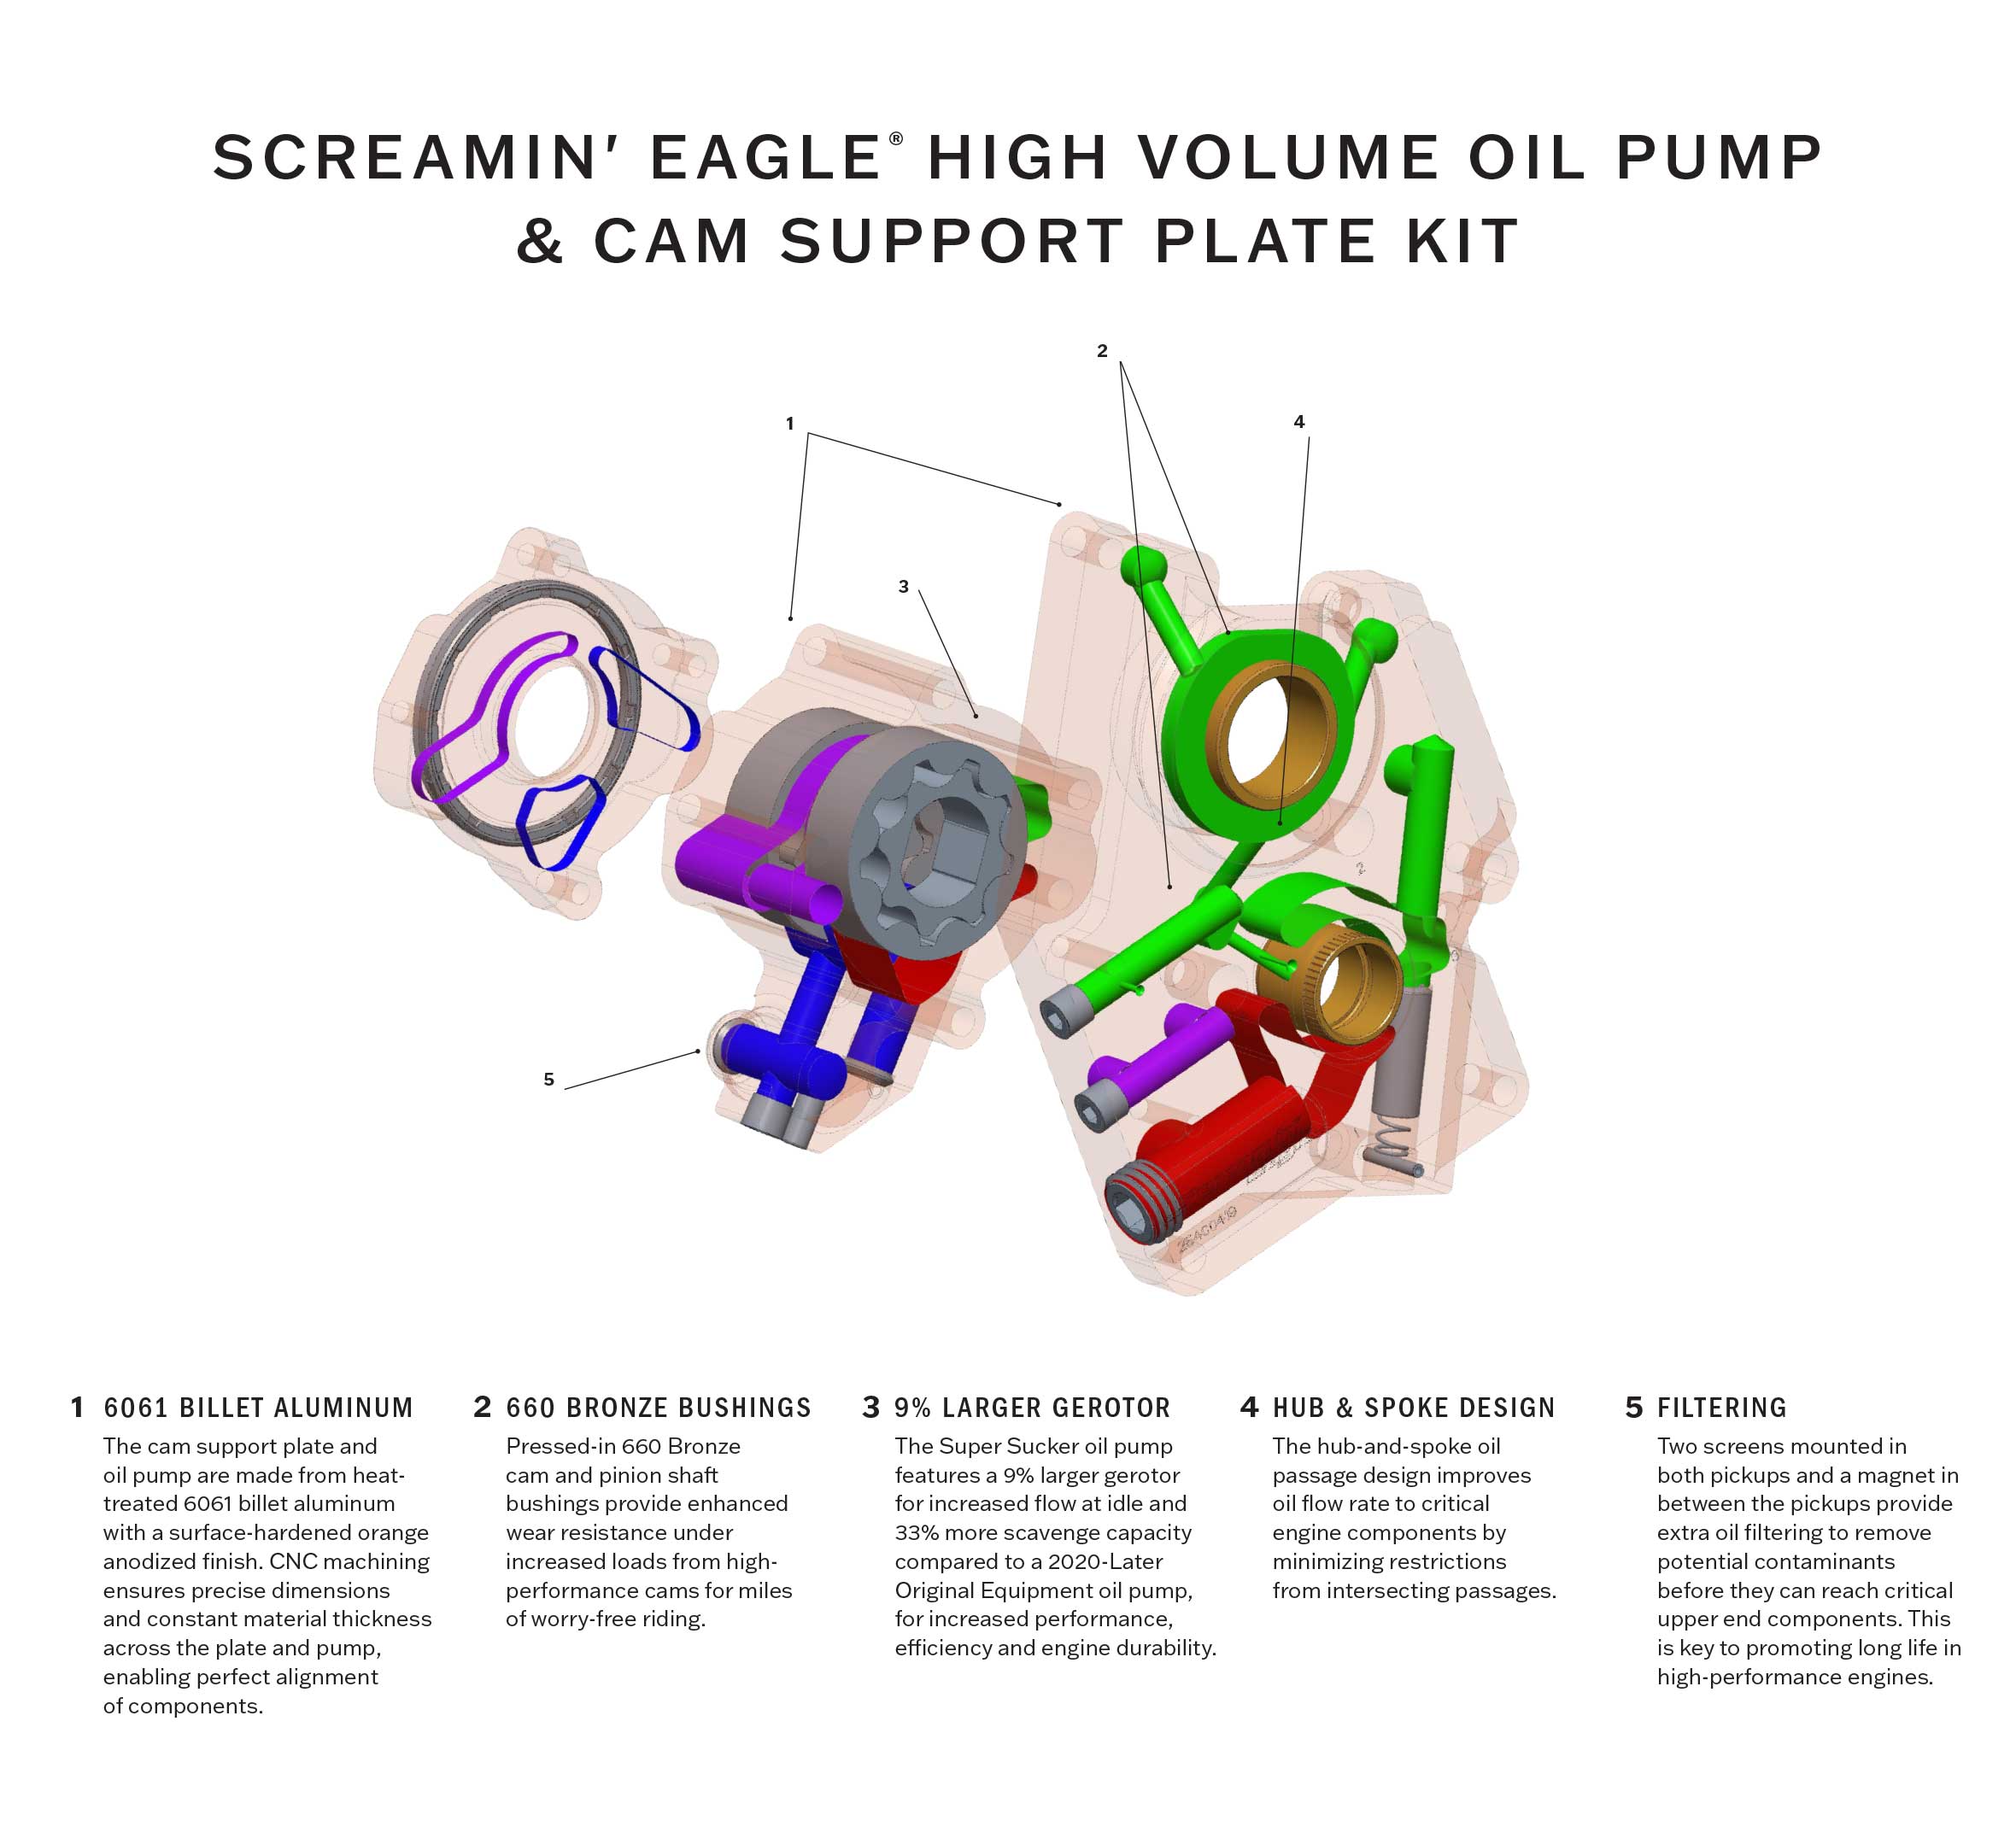 Screamin' Eagle Pro High Volume Oil Pump & Cam Support Plate Kit